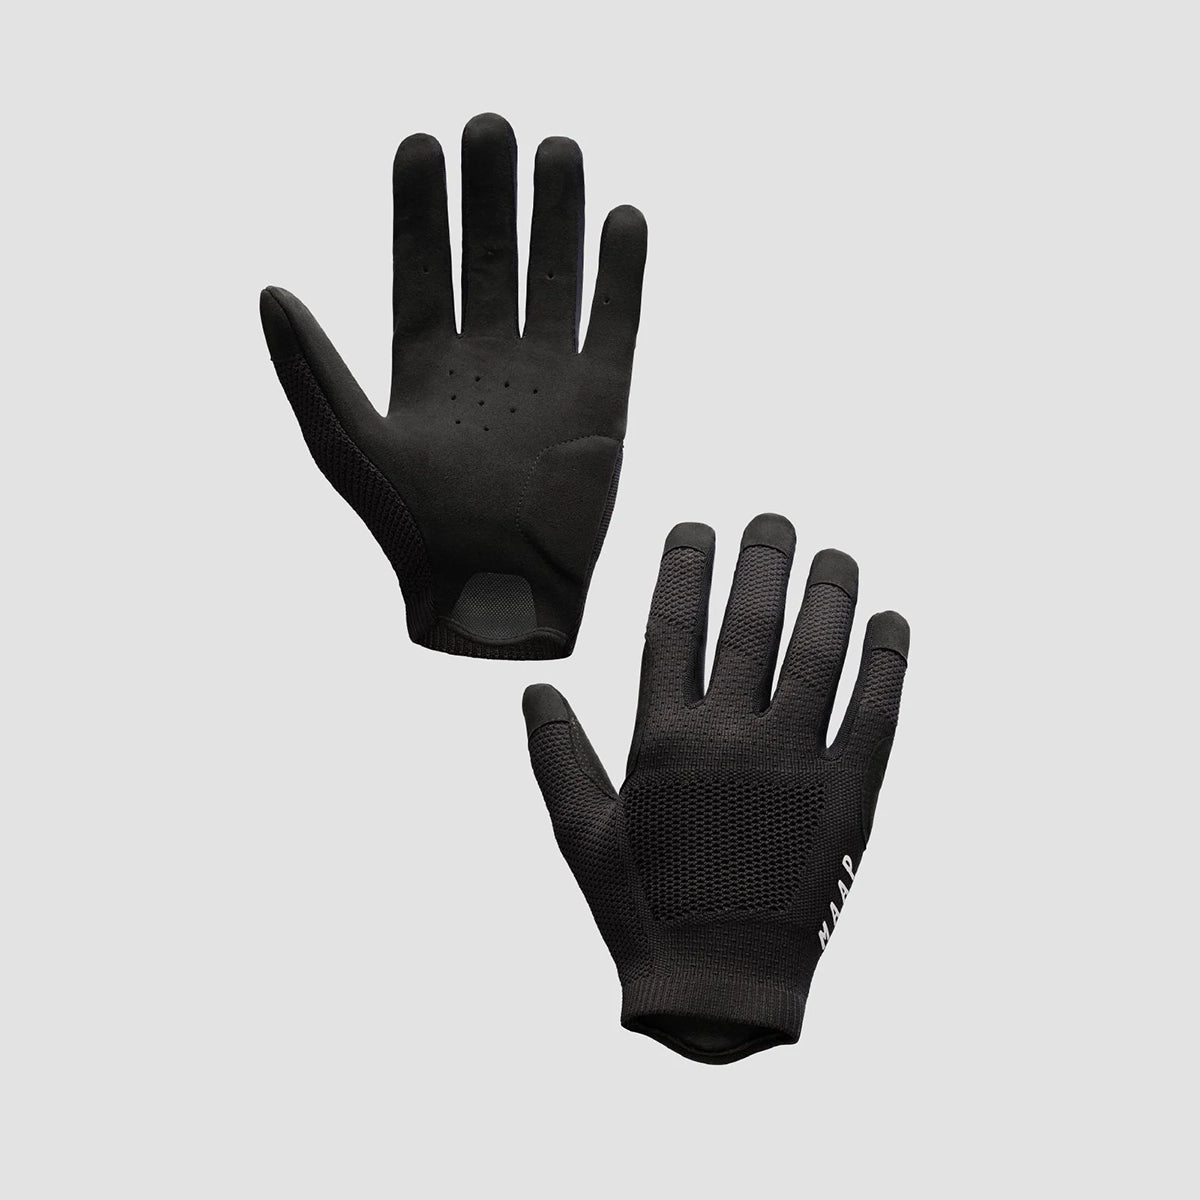 Alt_Road Glove - Black